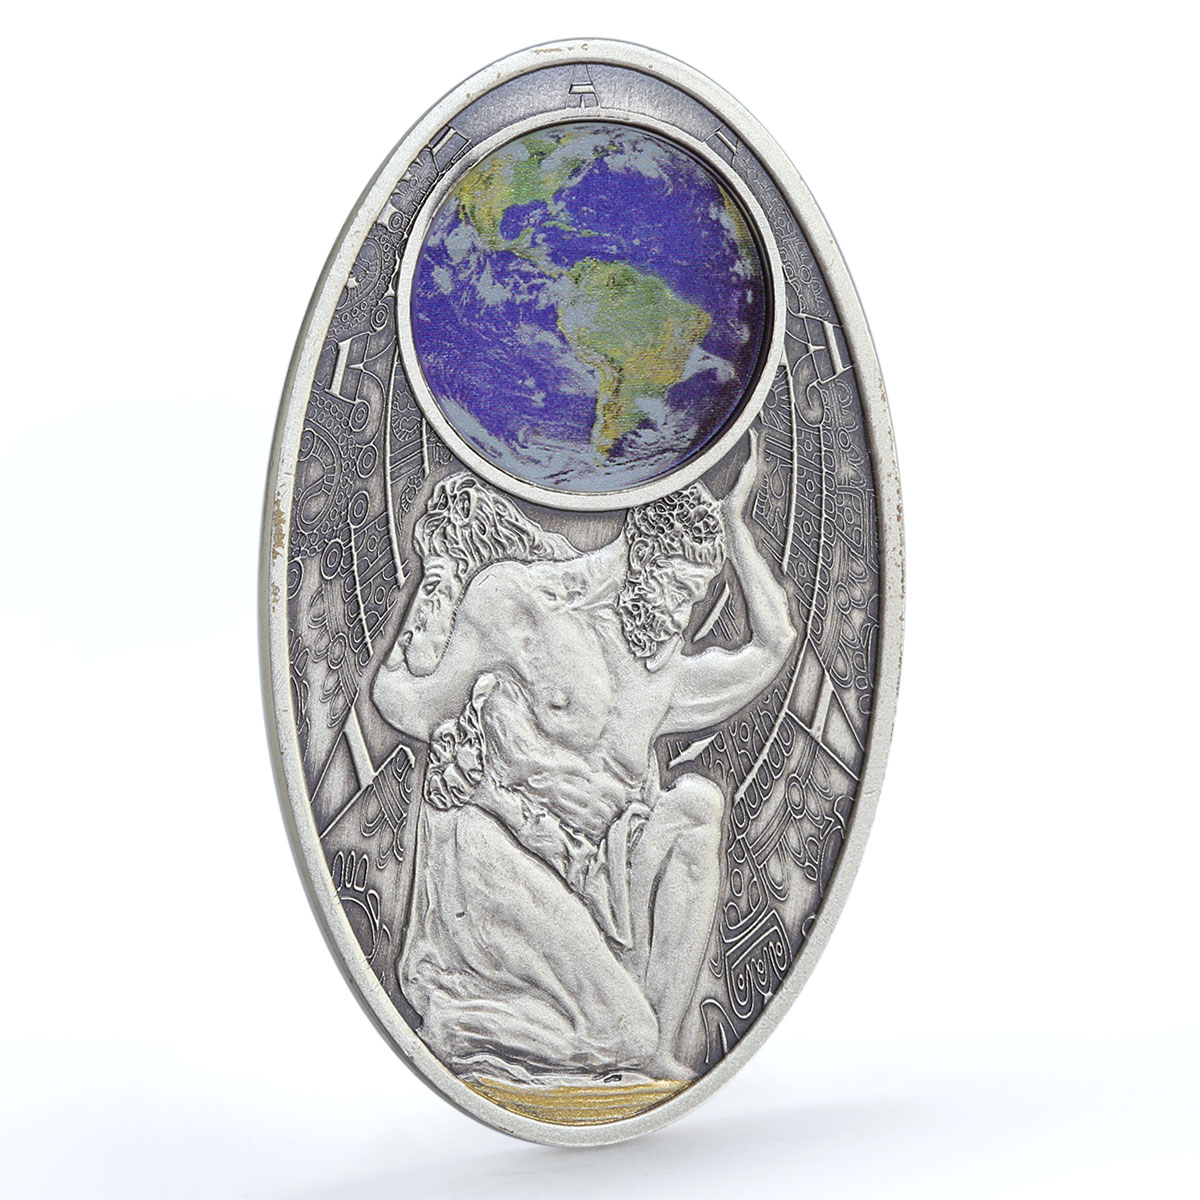 Fiji 10 dollars Apocalypse Greek Titan Atlas Mythology hologram silver coin 2012